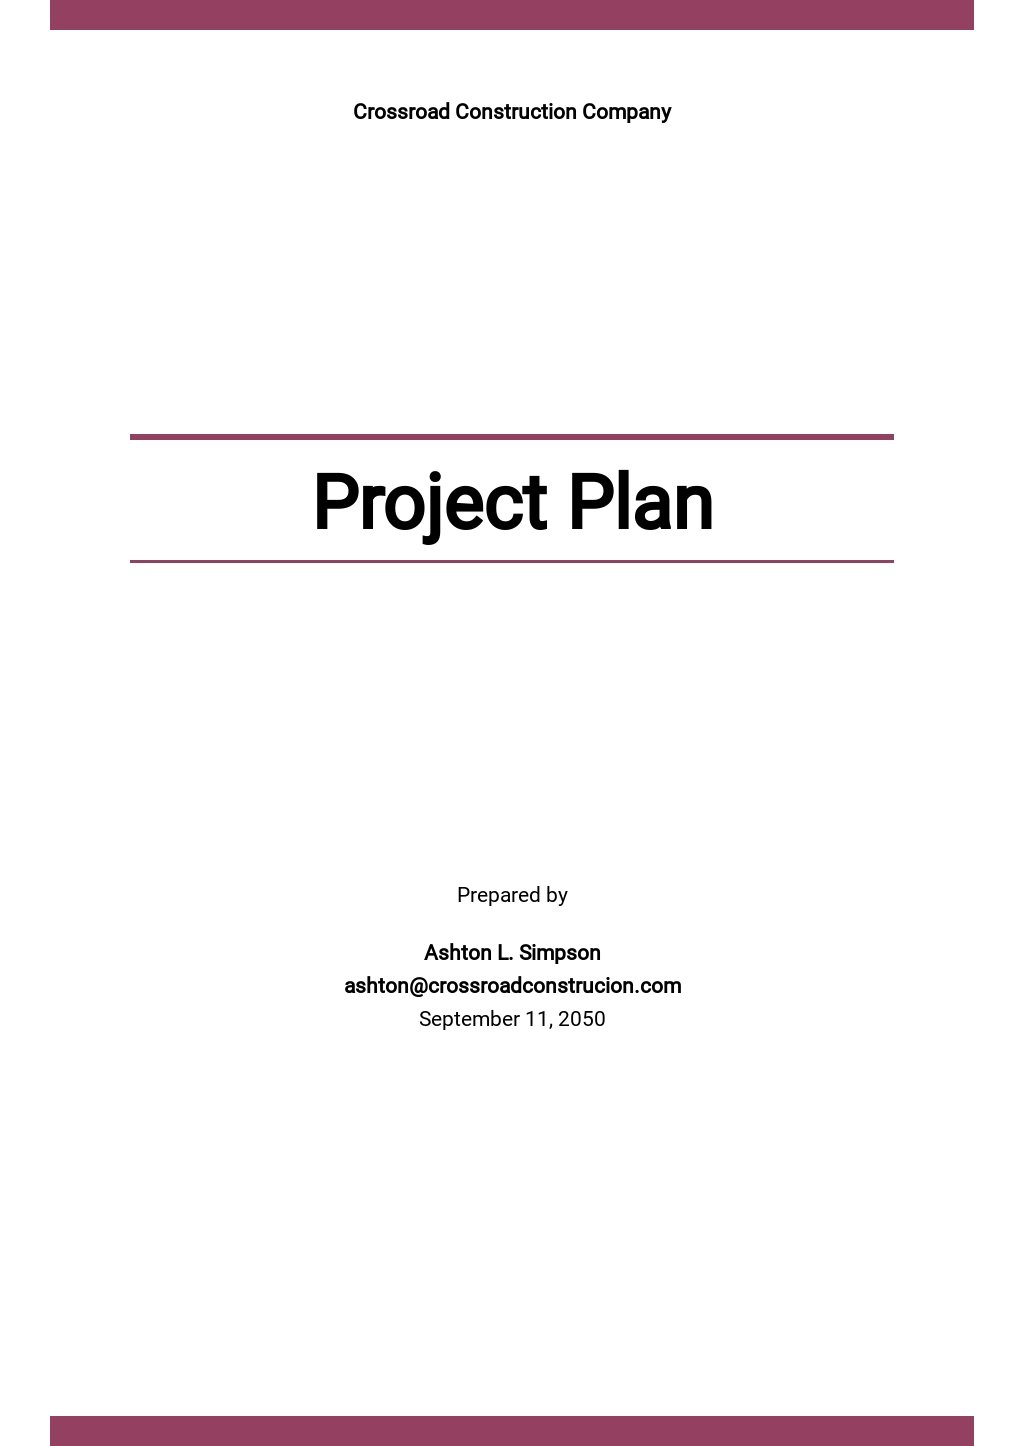 Sample Project Plan Template.jpe